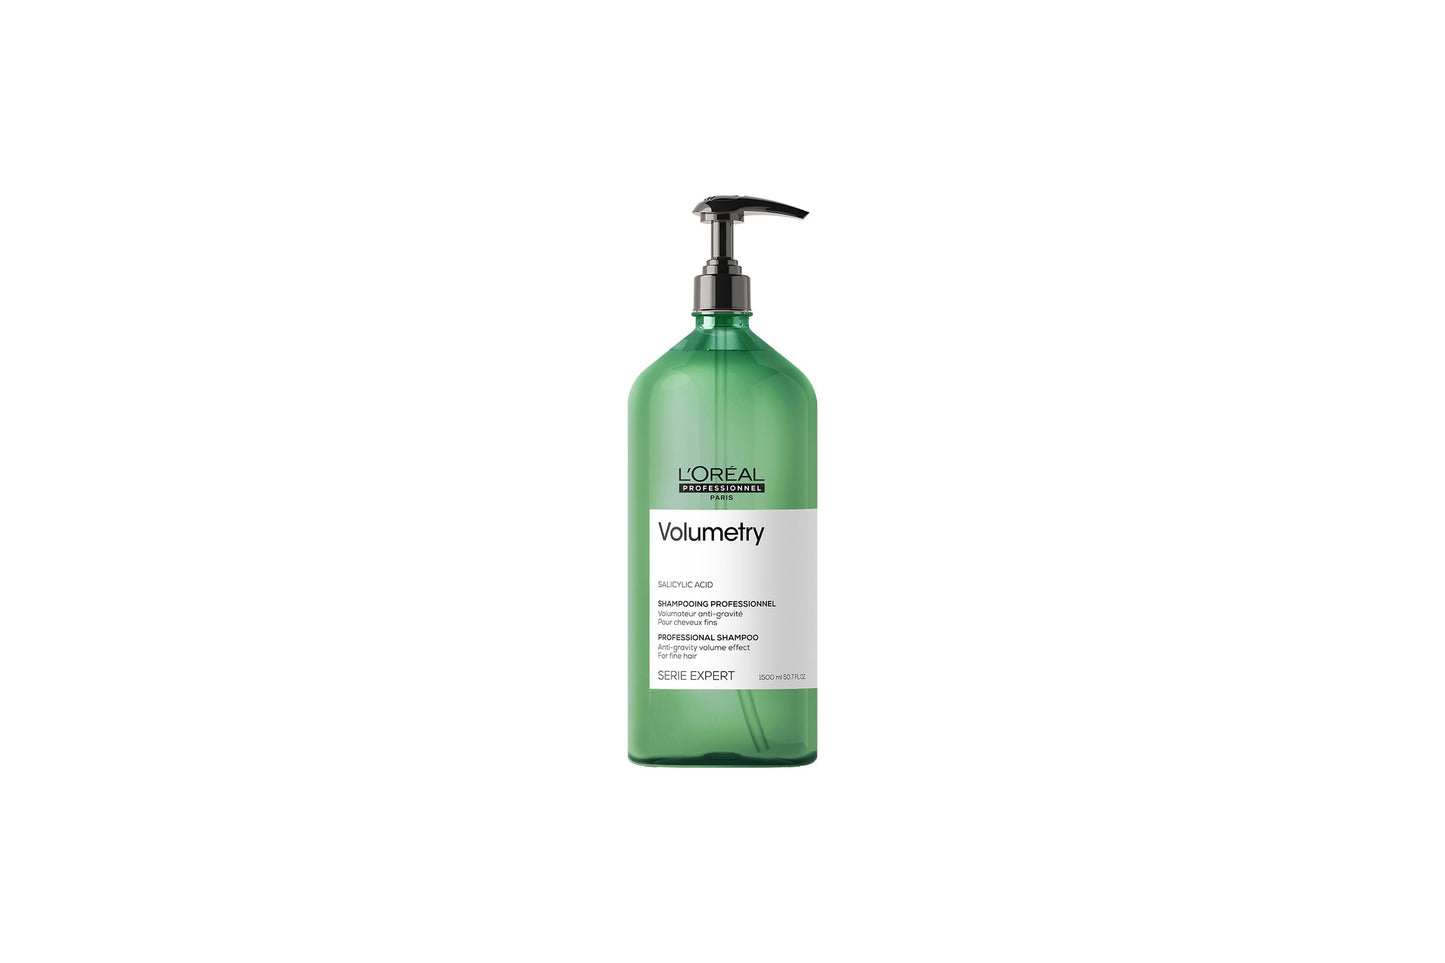 L'Oreal Volumetry Shampoo with Pump 1500ml